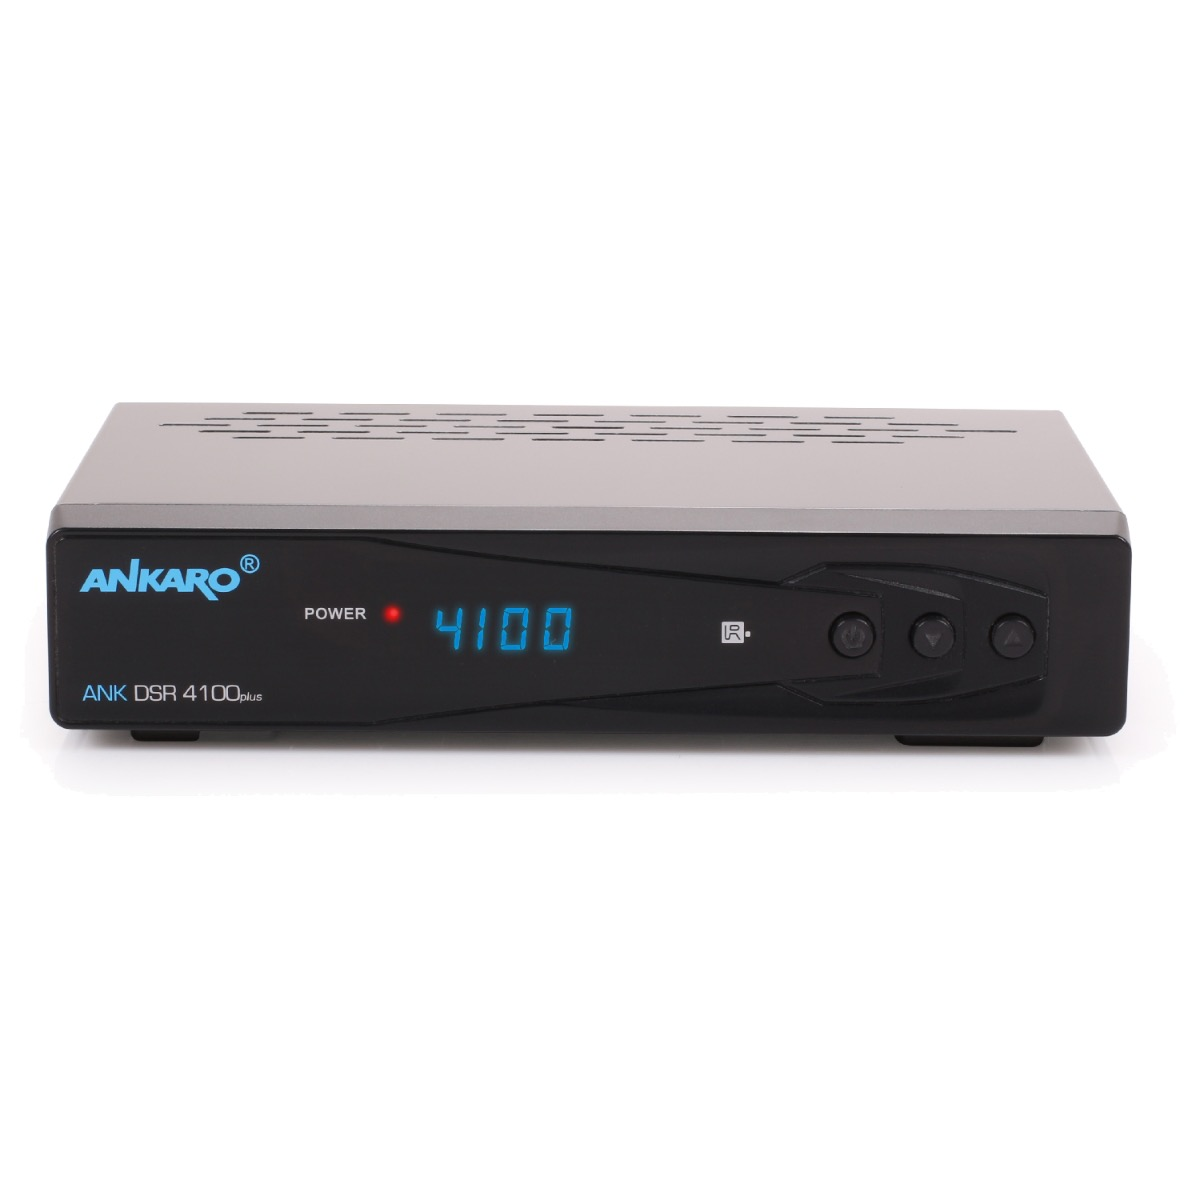 ANKARO ANK DSR (HDTV, Receiver Satelliten Digitaler Plus Receiver, DVB-S2, Sat HD, DVB-S, HDMI DVB-S2, DVB-C2, Full PVR-Funktion, DVB-T2 mit 1080p 4100 schwarz) (H.265), PVR